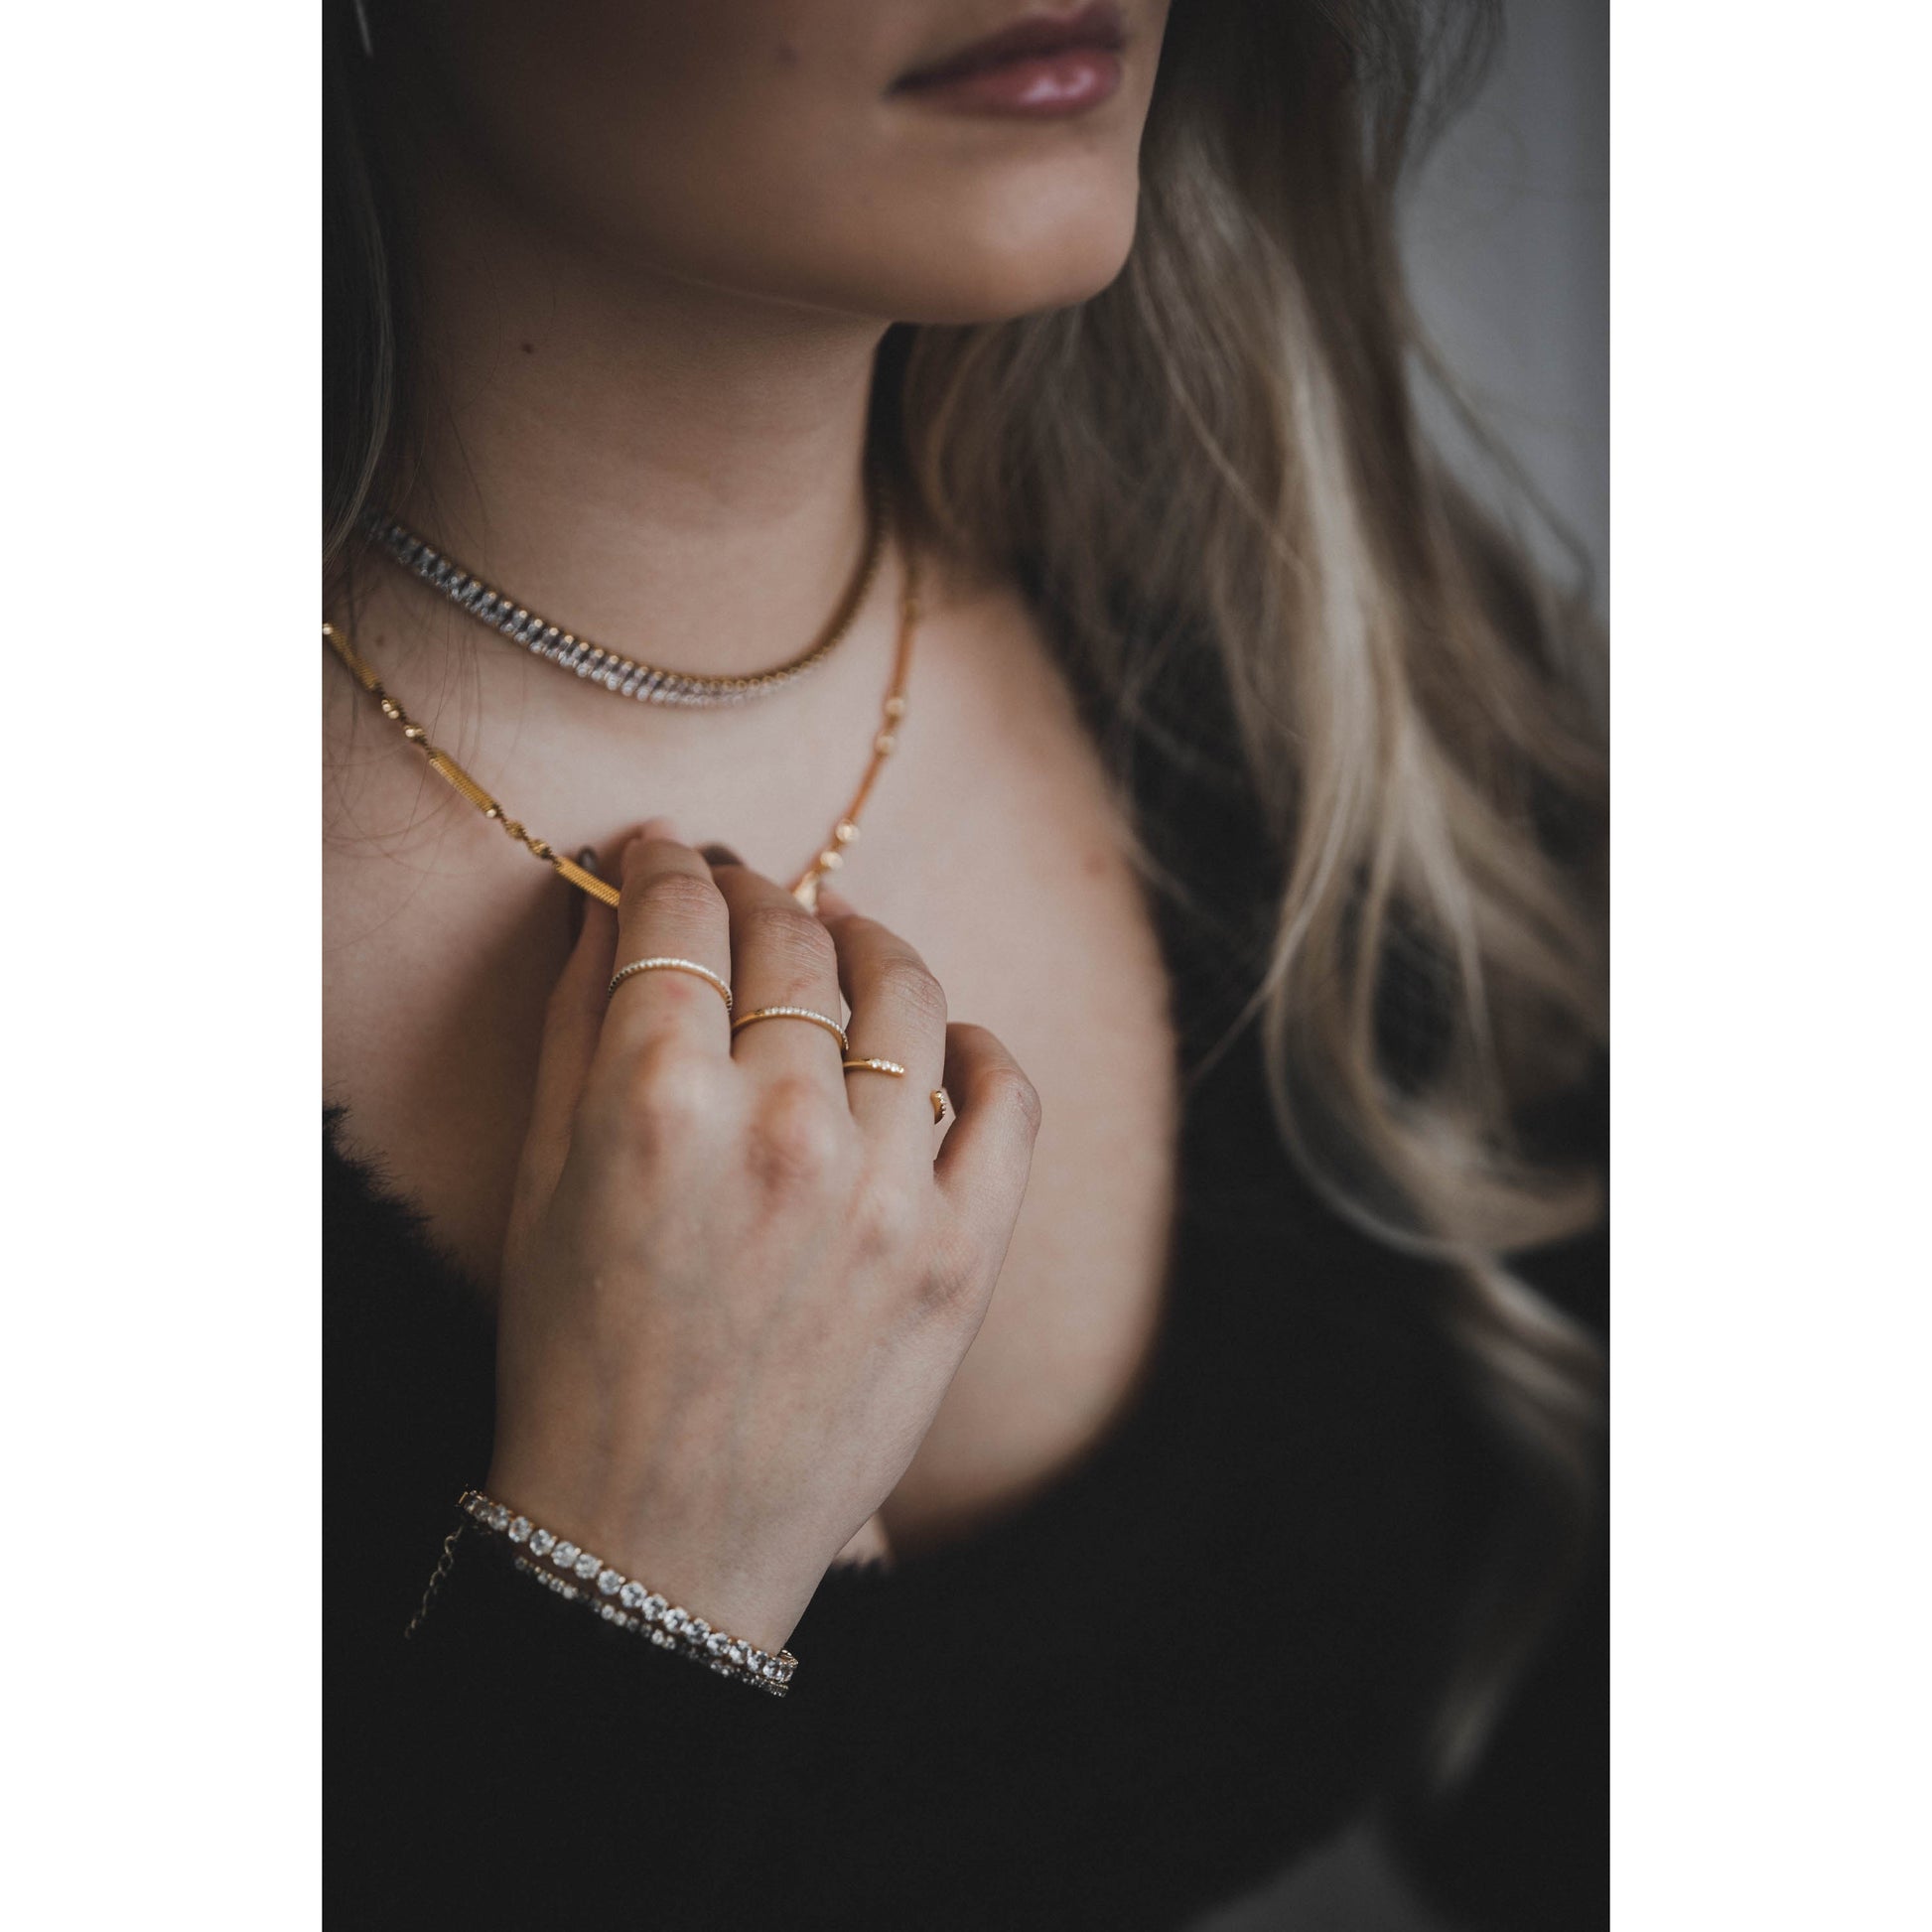 Joly Kette Halskette Yasemen Store Schmuck Accessoires Ketten Stainless Steel Edelstahl 14K Vergoldet Gold jewel jewelry chain necklaces